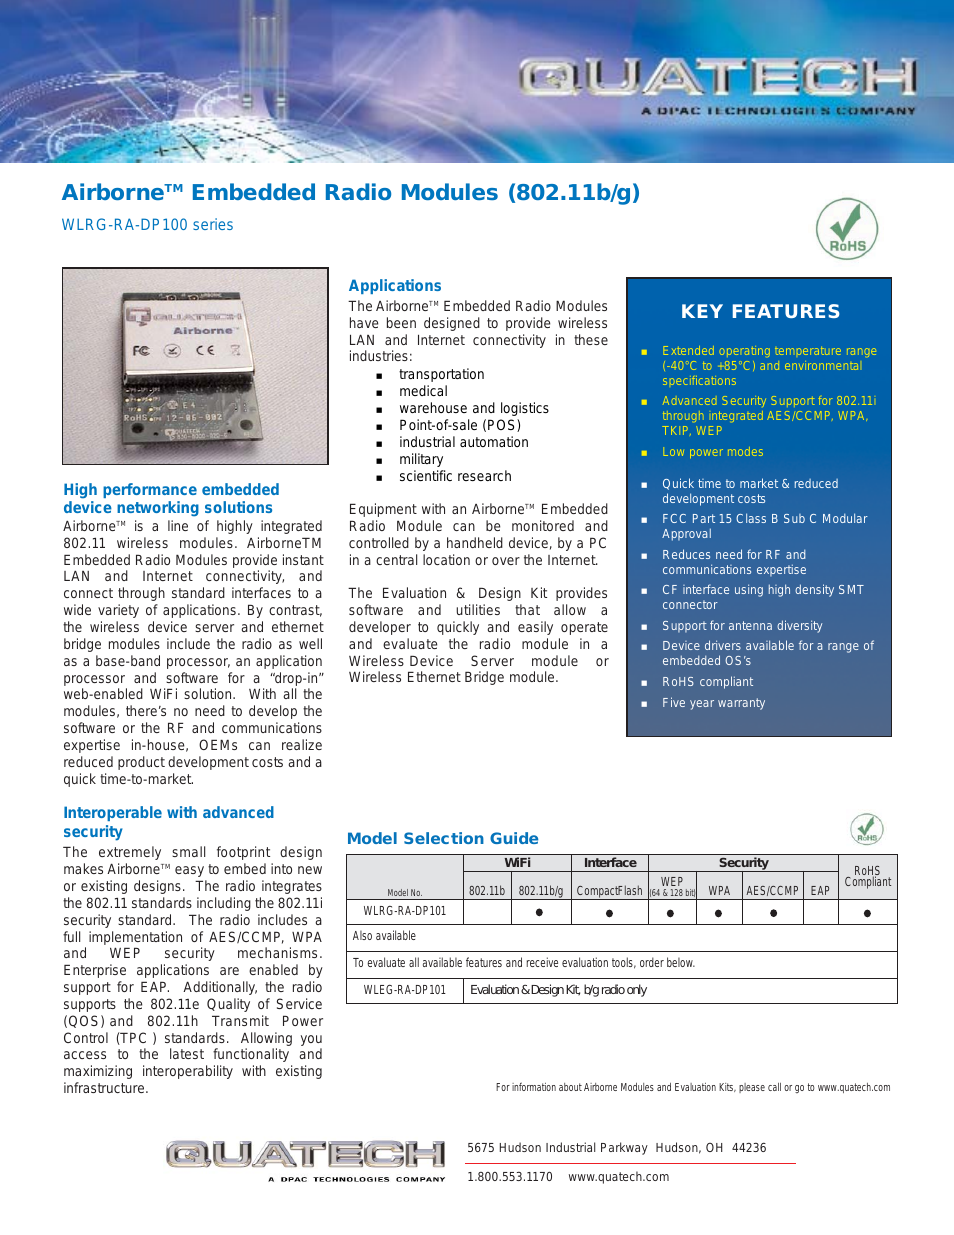 Airborne Embedded Radio Modules WLRG-RA-DP100